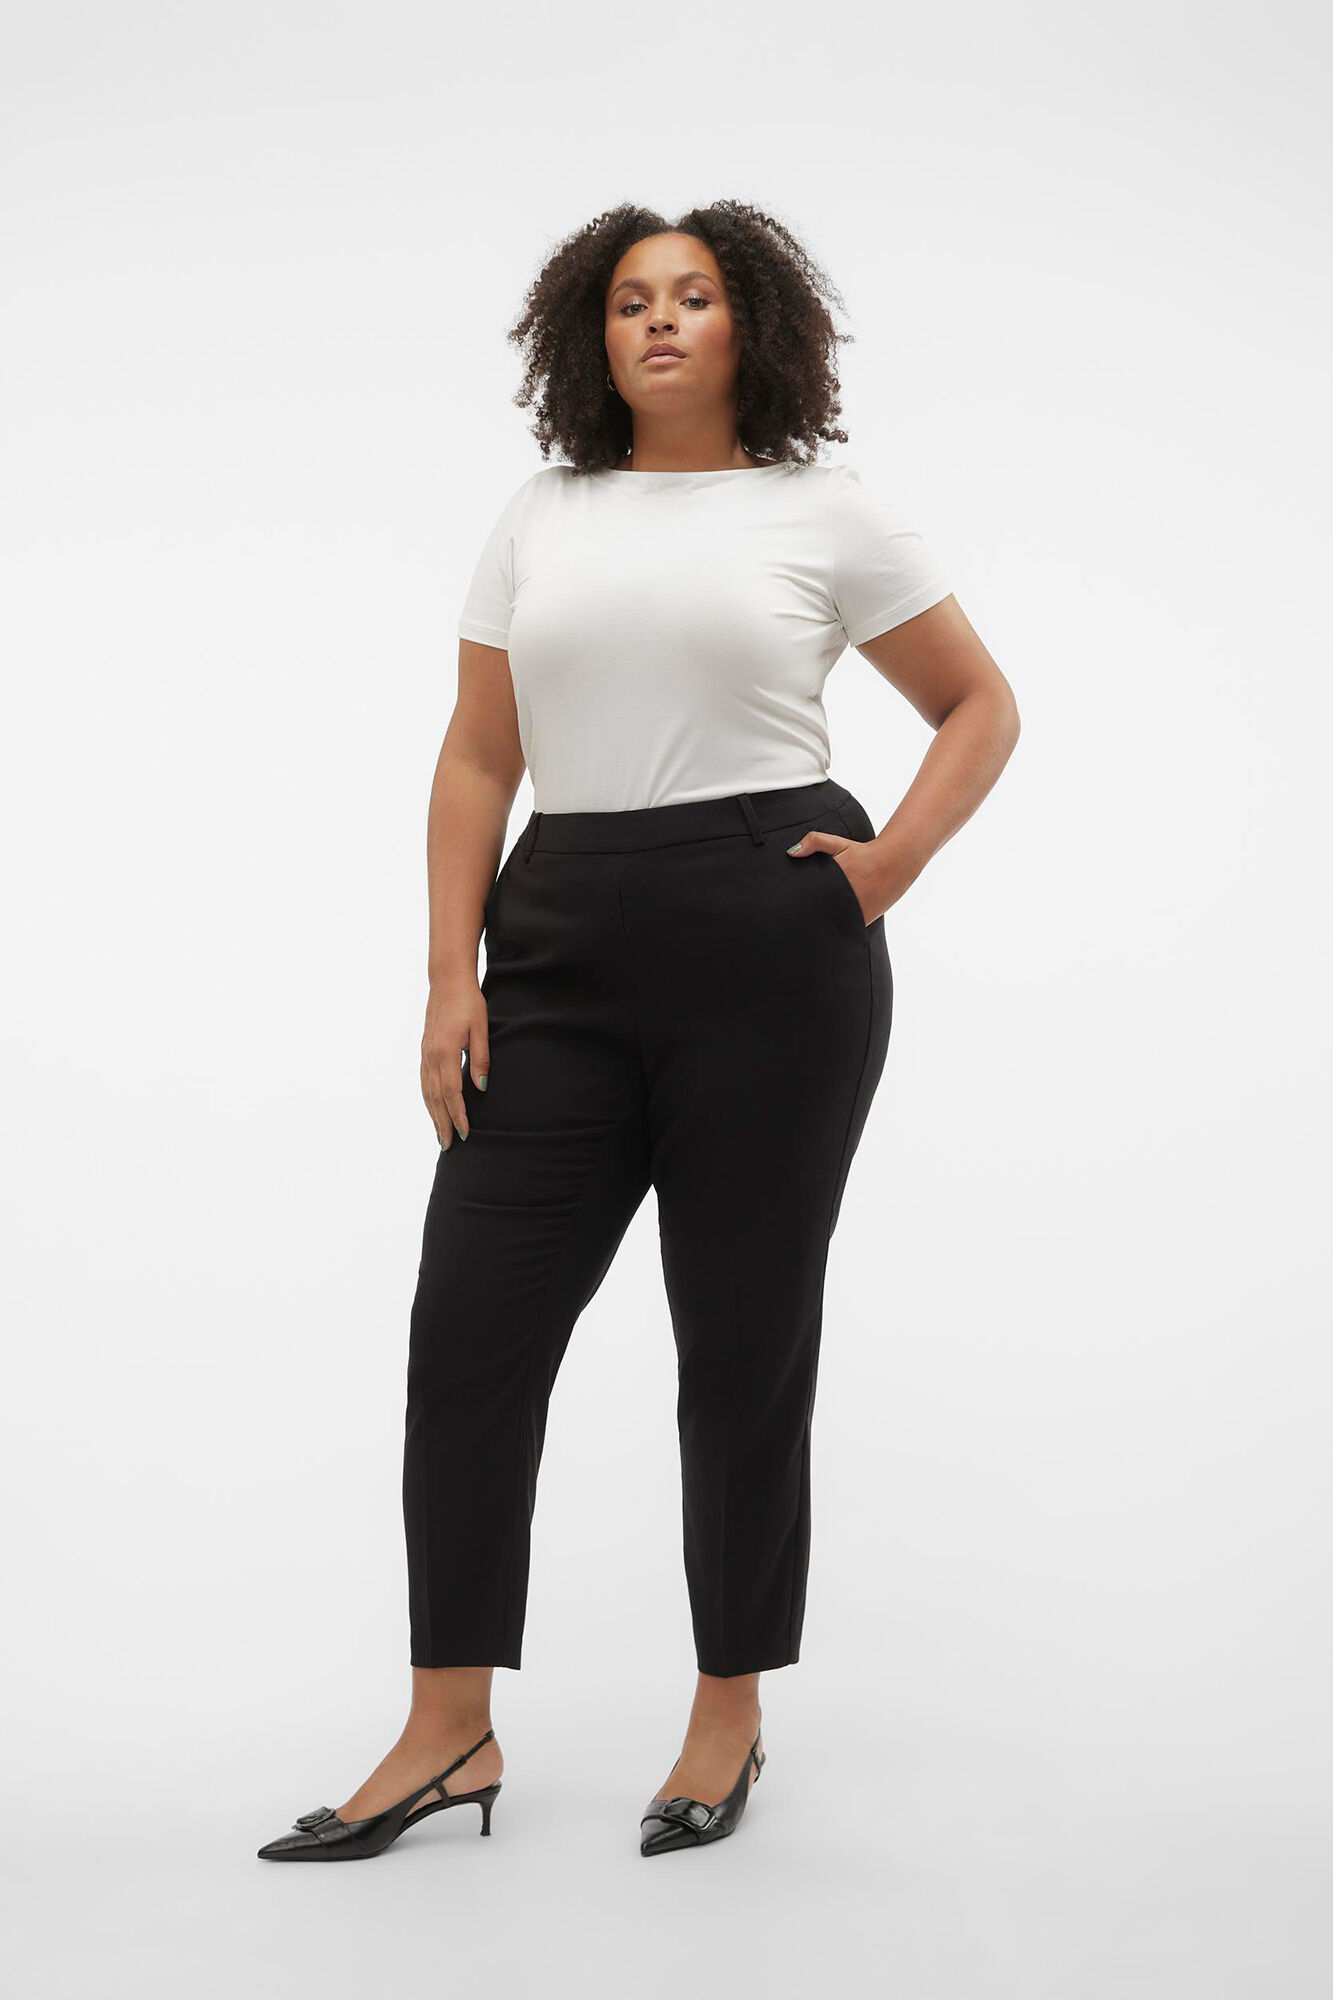 Ladies Women's Black Girls School Trousers Skinny Stretch Office Work Pants  6-18 | eBay